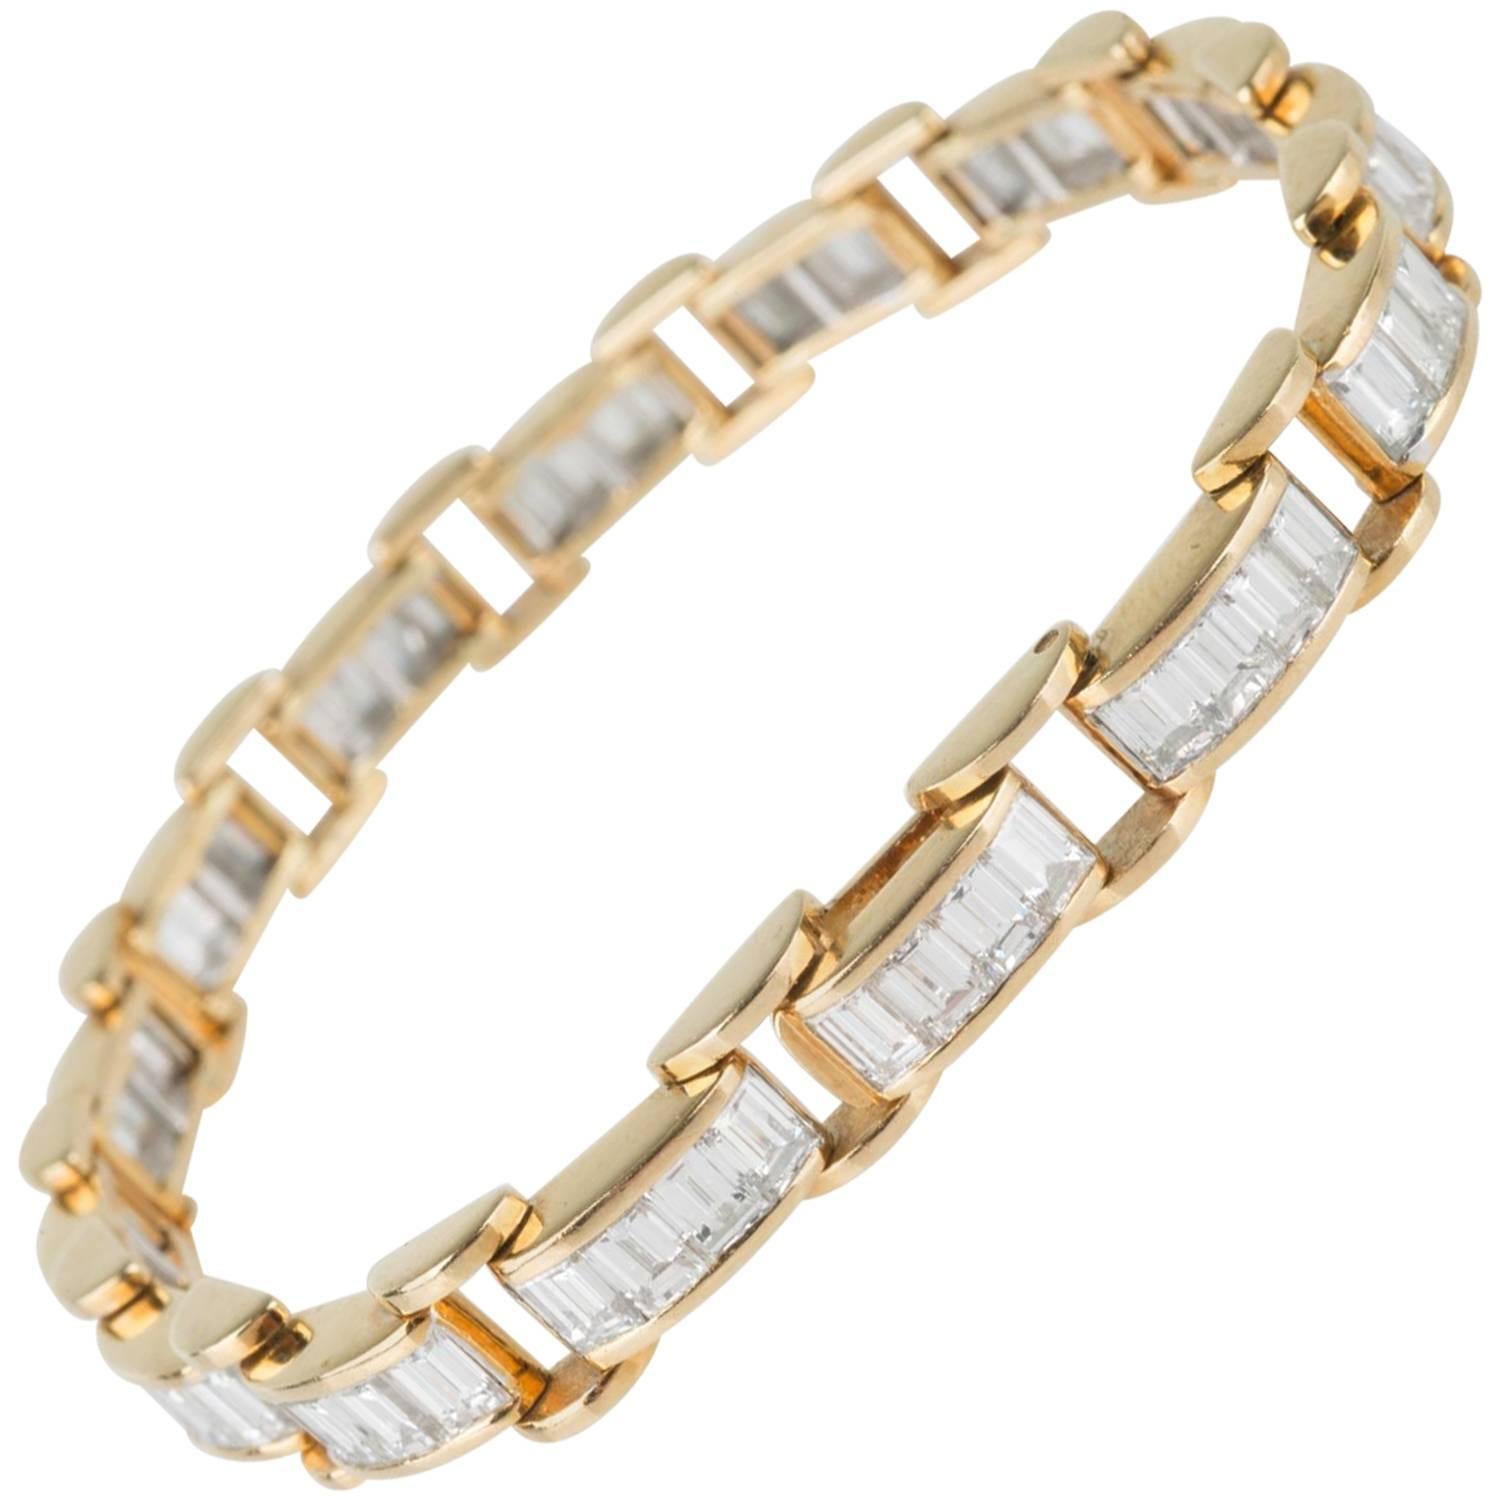 6.85 Carat & 18K Gold, GIA Certified Diamond Bracelet in a Chain Link Style